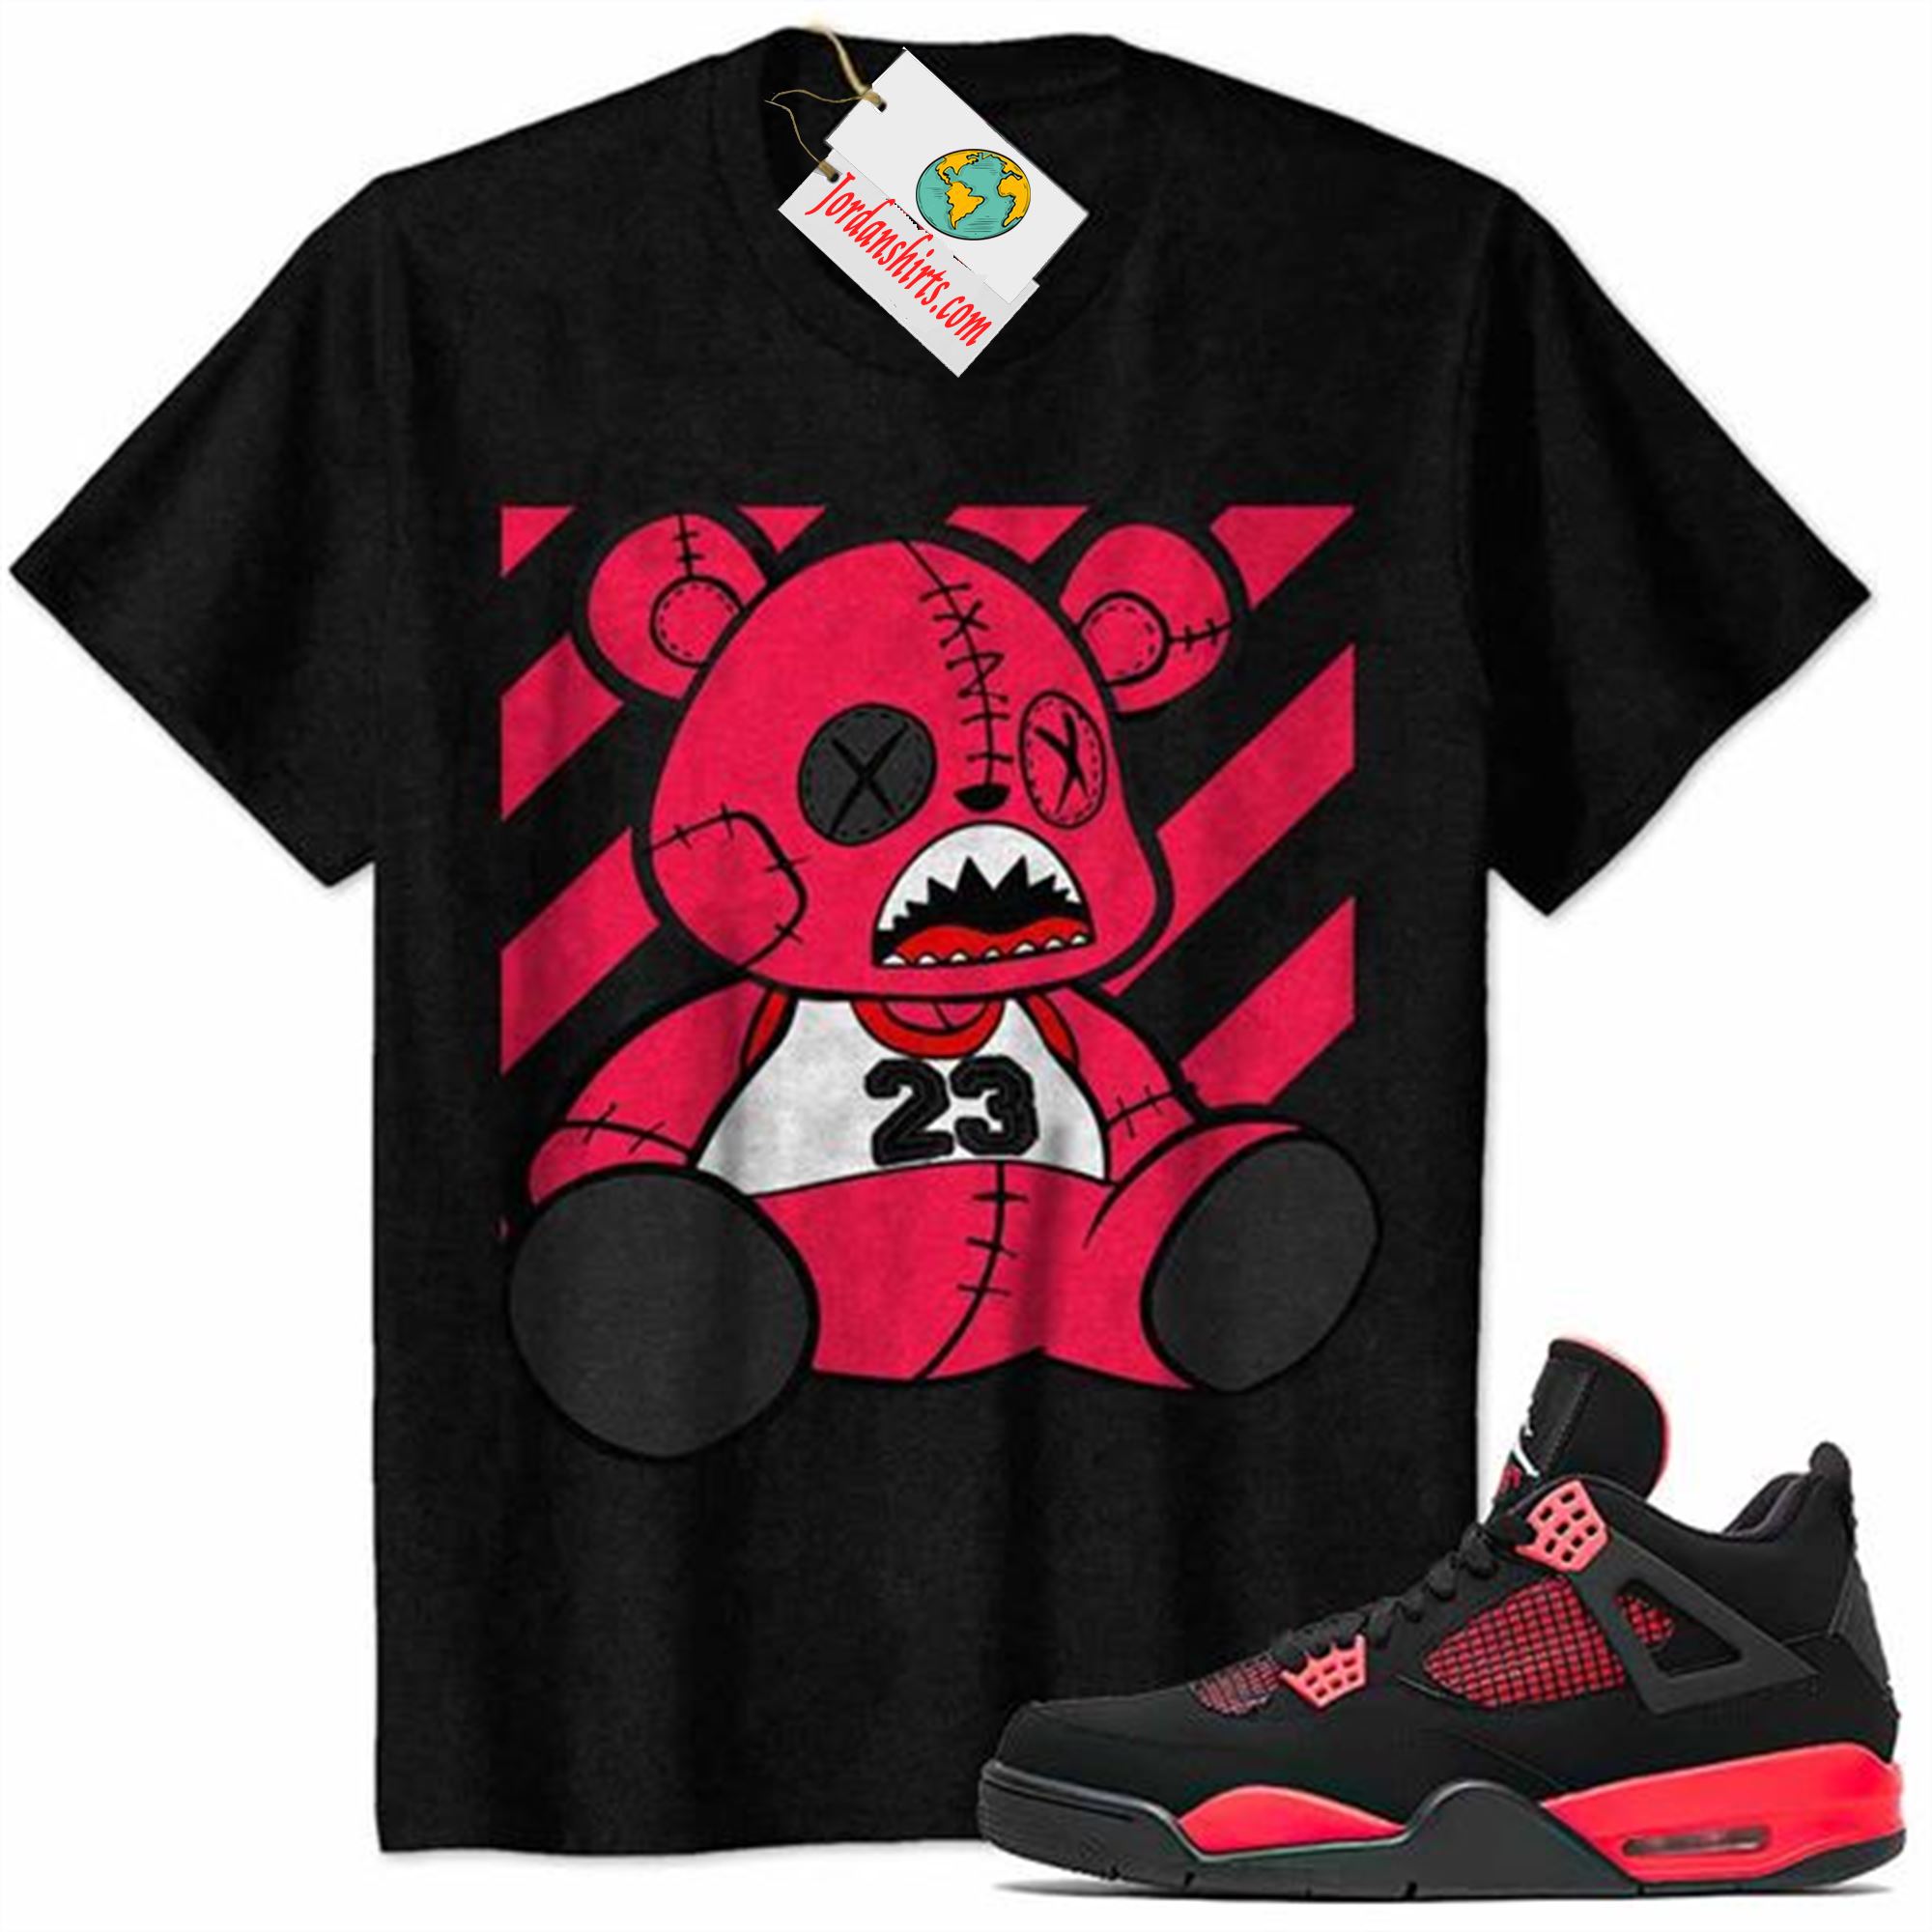 Jordan 4 Shirt, 23 Teddy Black Air Jordan 4 Red Thunder 4s Plus Size Up To 5xl